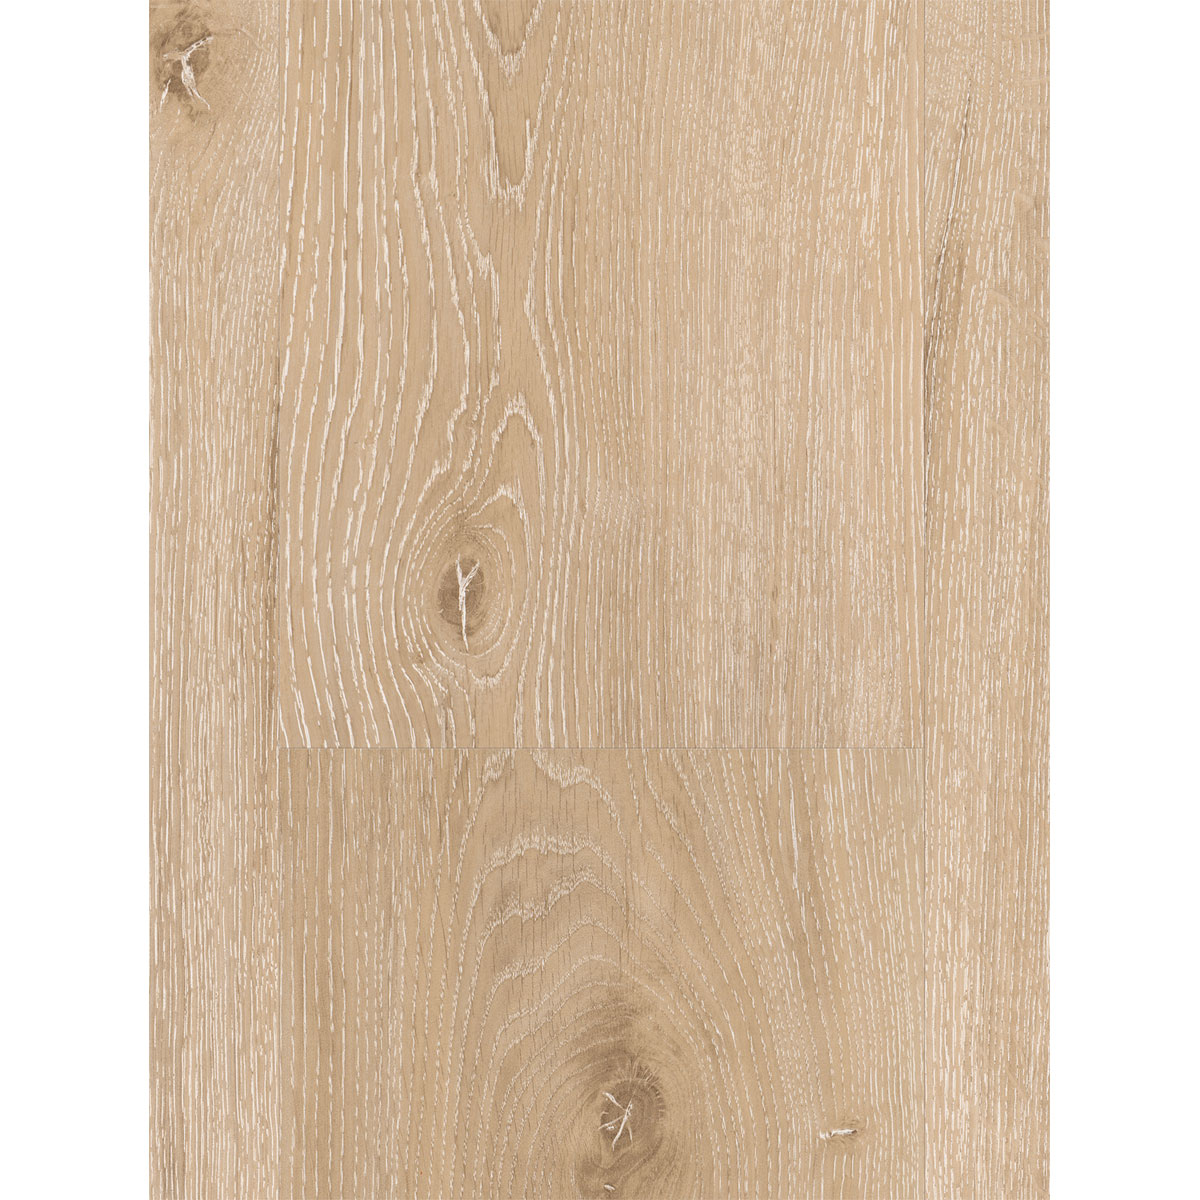 Vinylboden „Basic 30“, Eiche Royal hell gekälkt, Holzstruktur, 21,6x120,7 cm